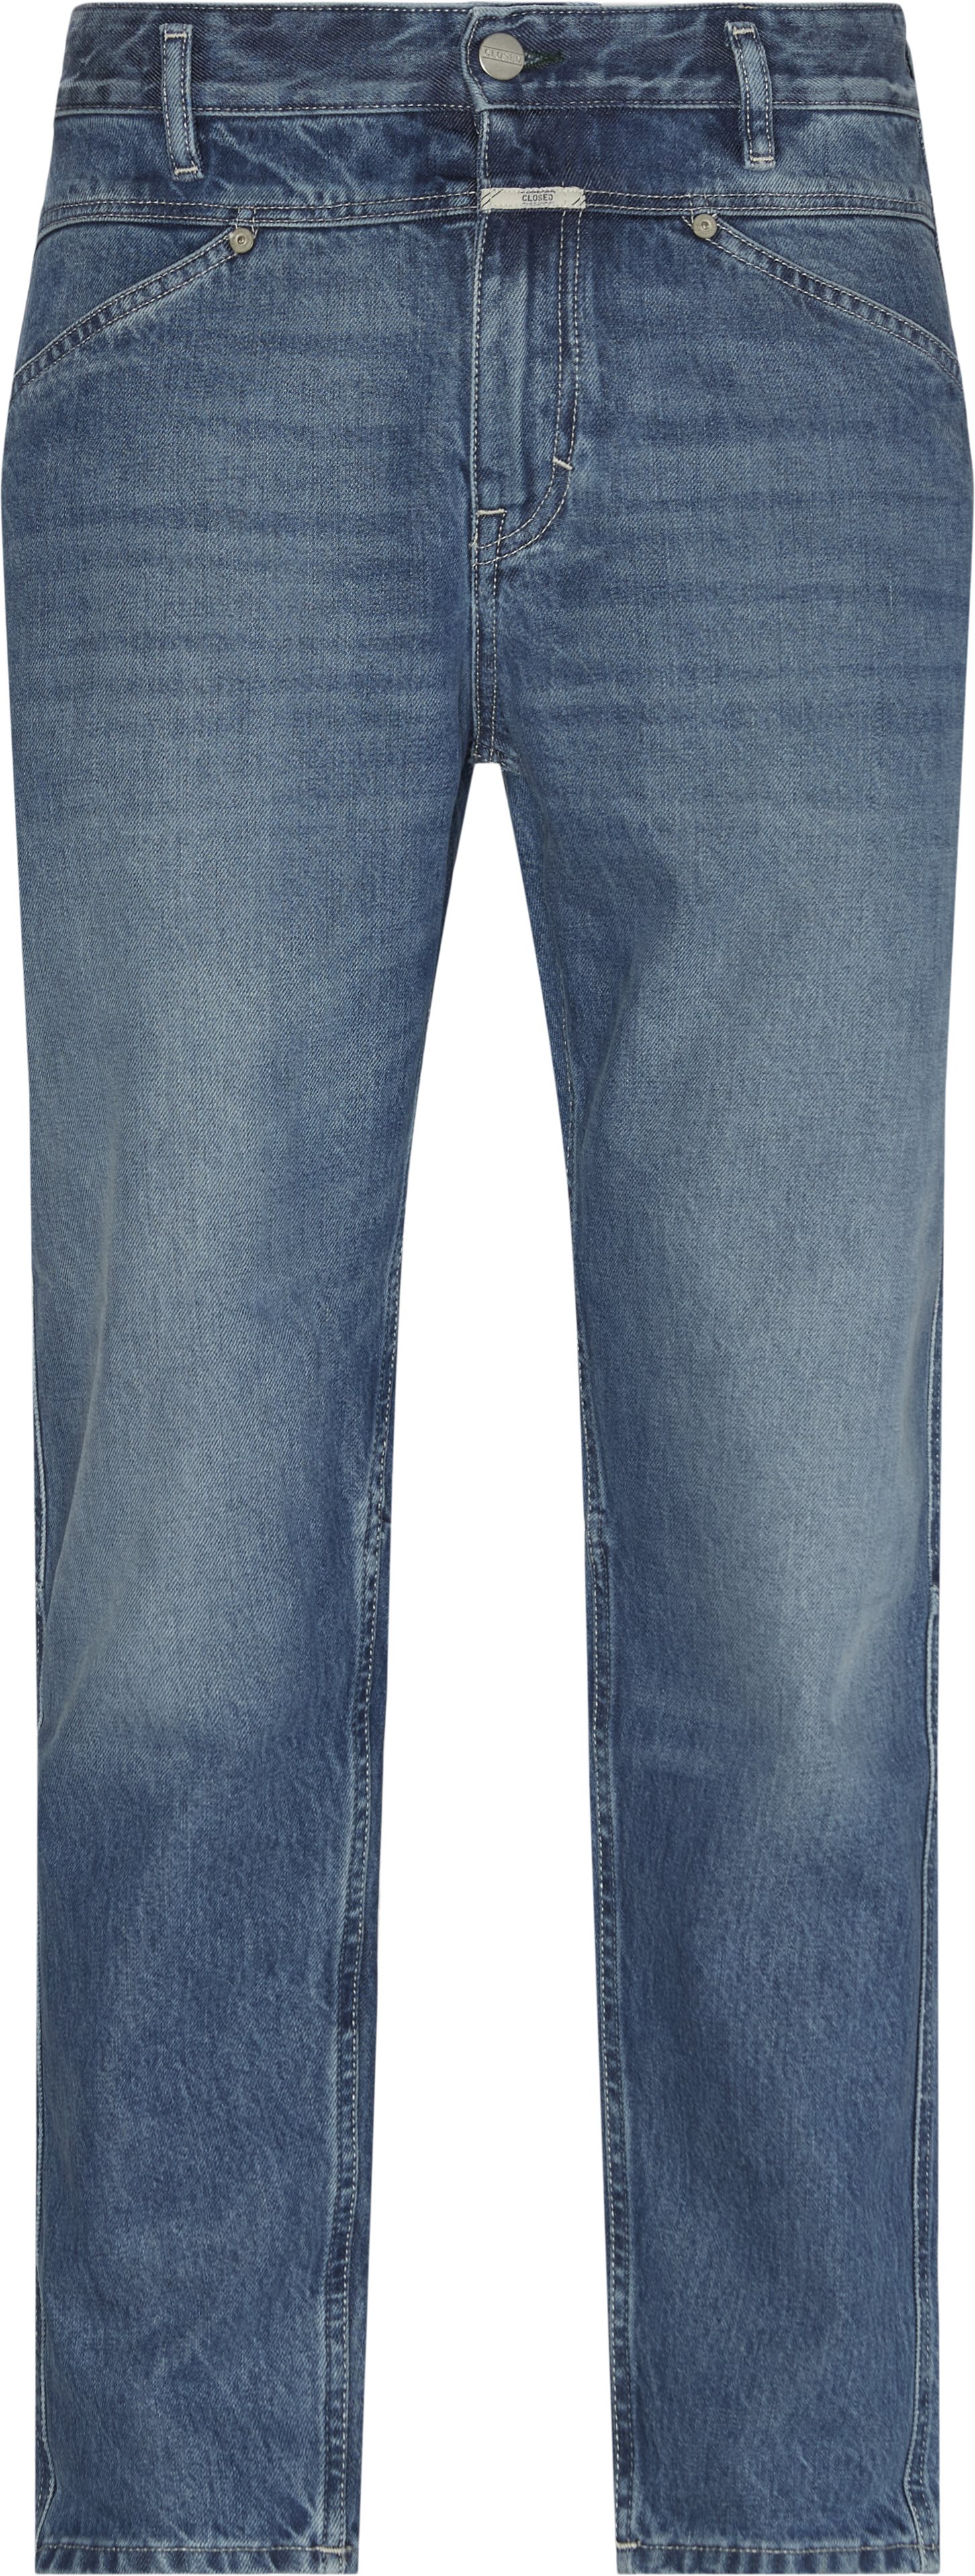 Cropped Jeans - Jeans - Loose fit - Blå